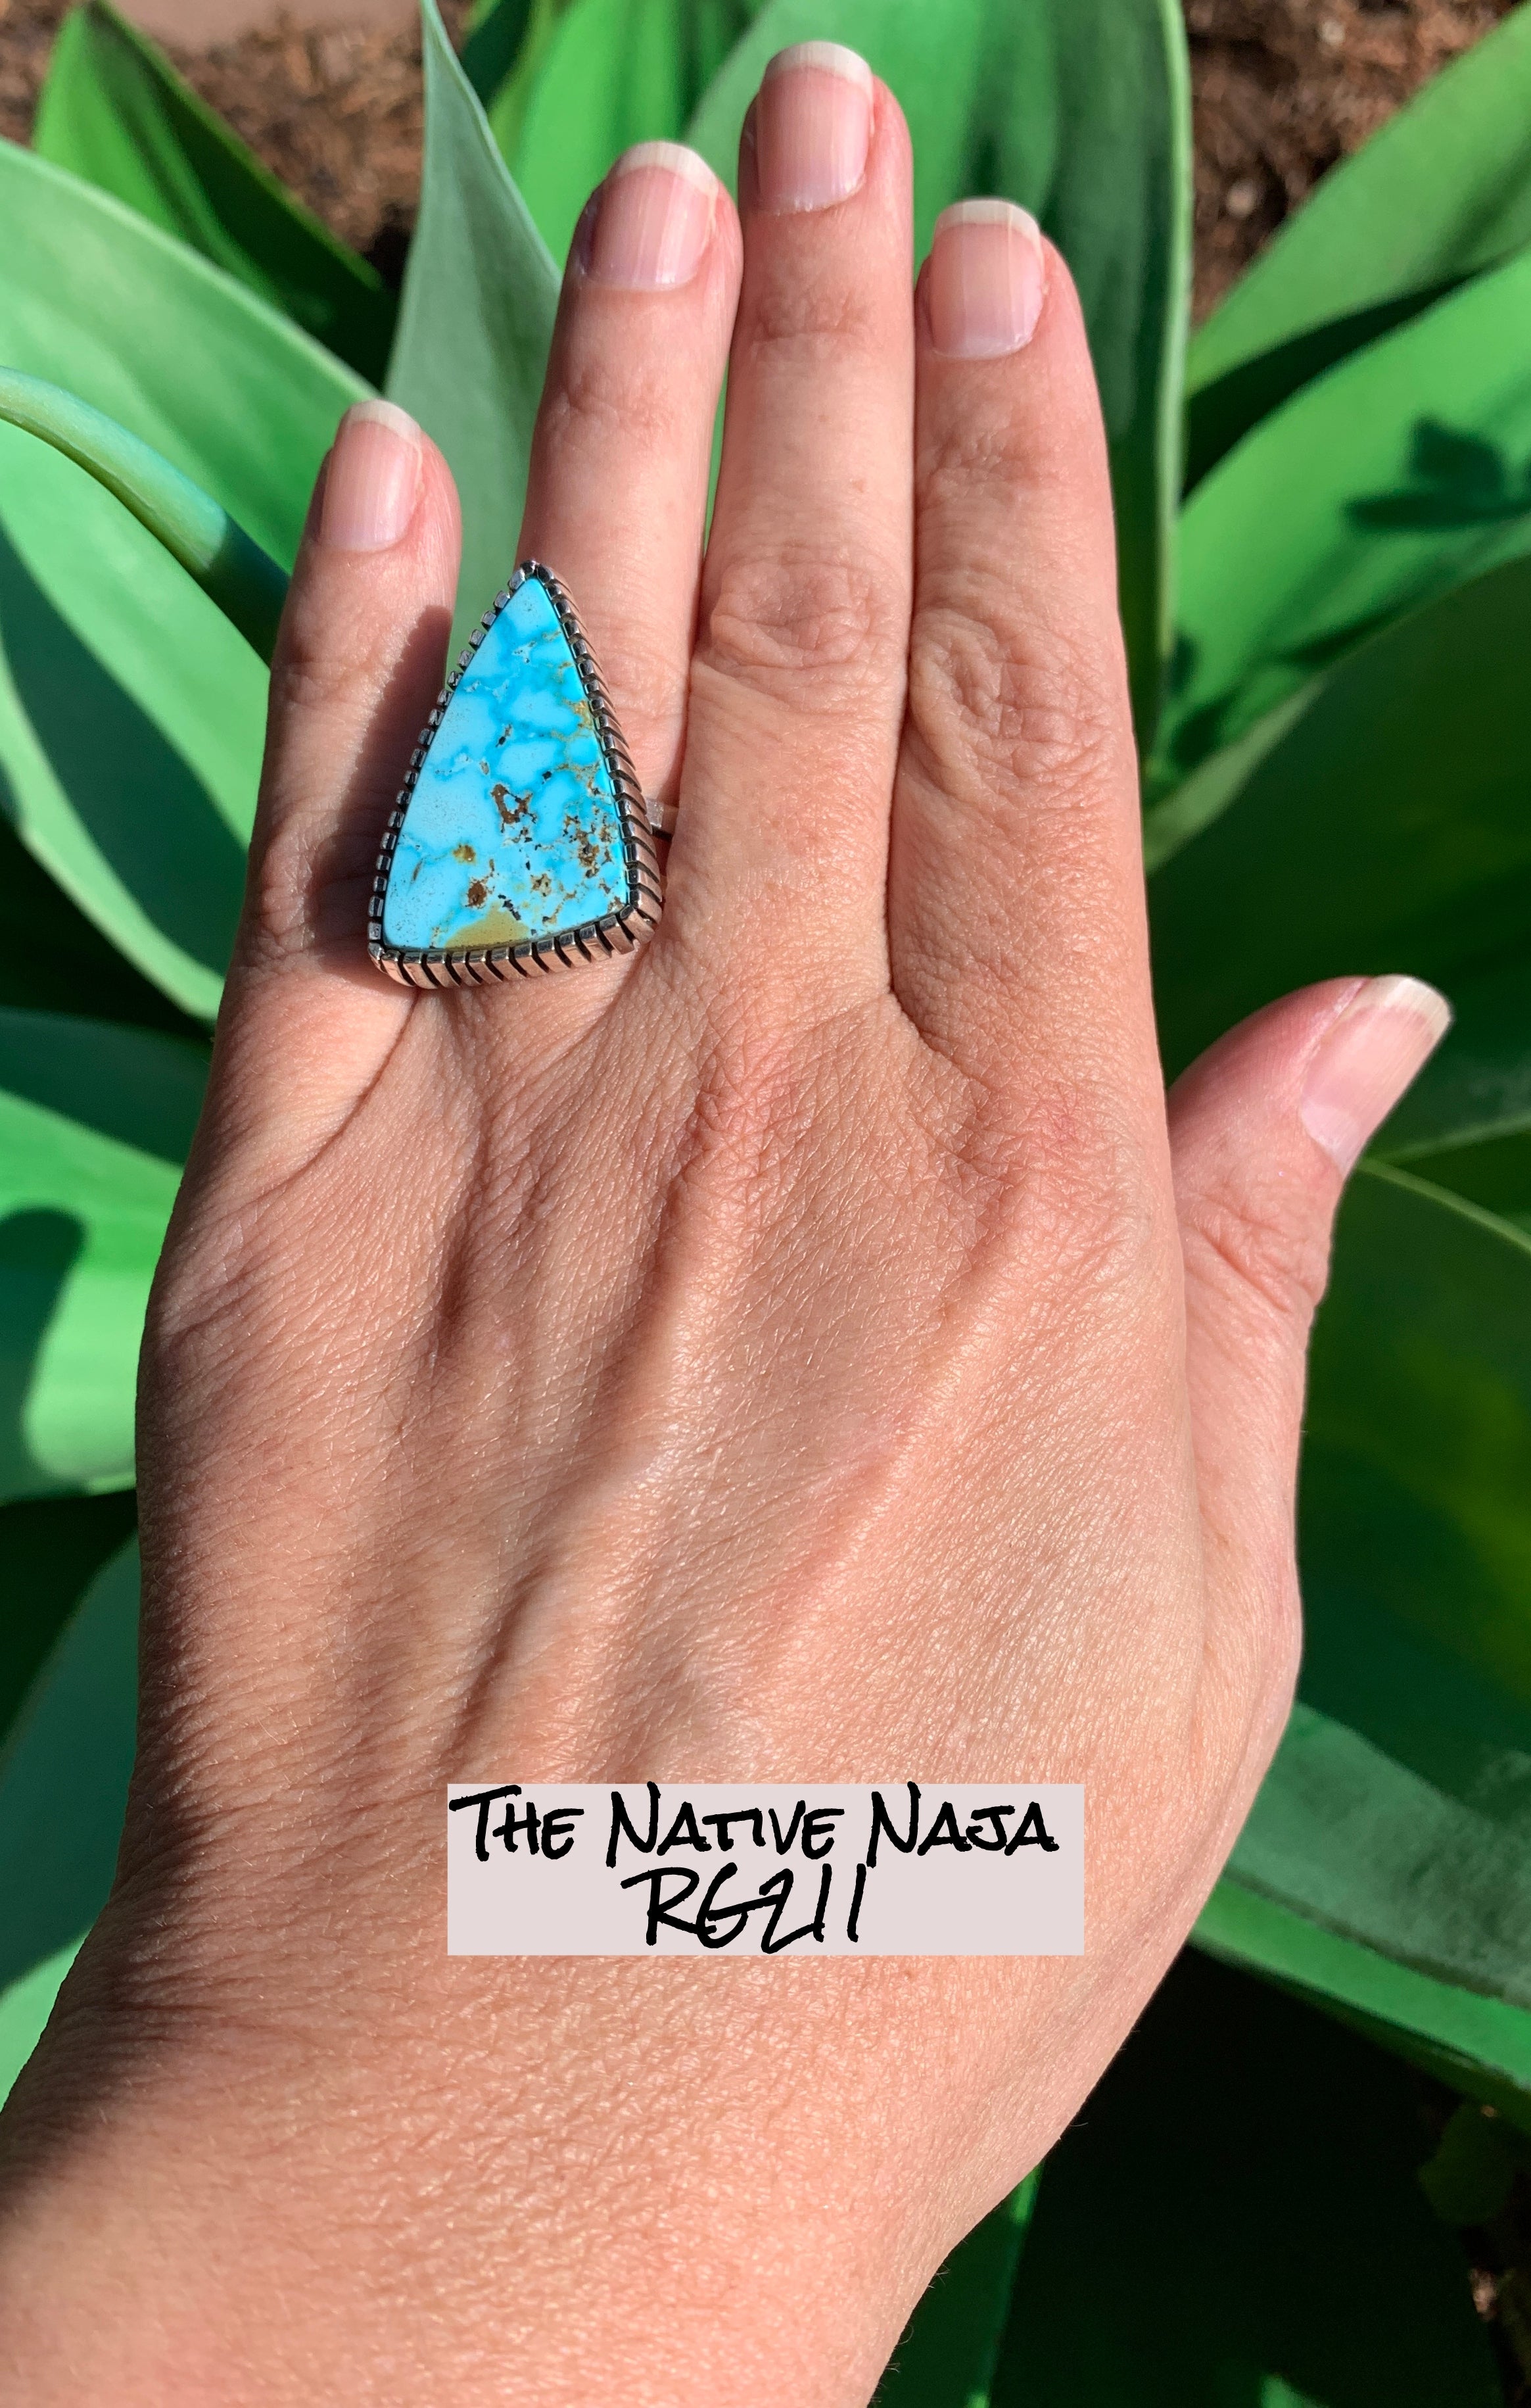 NM Navajo Landon Secatero Kingman Turquoise & Sterling Silver Statement Ring SZ 7.5 RG211